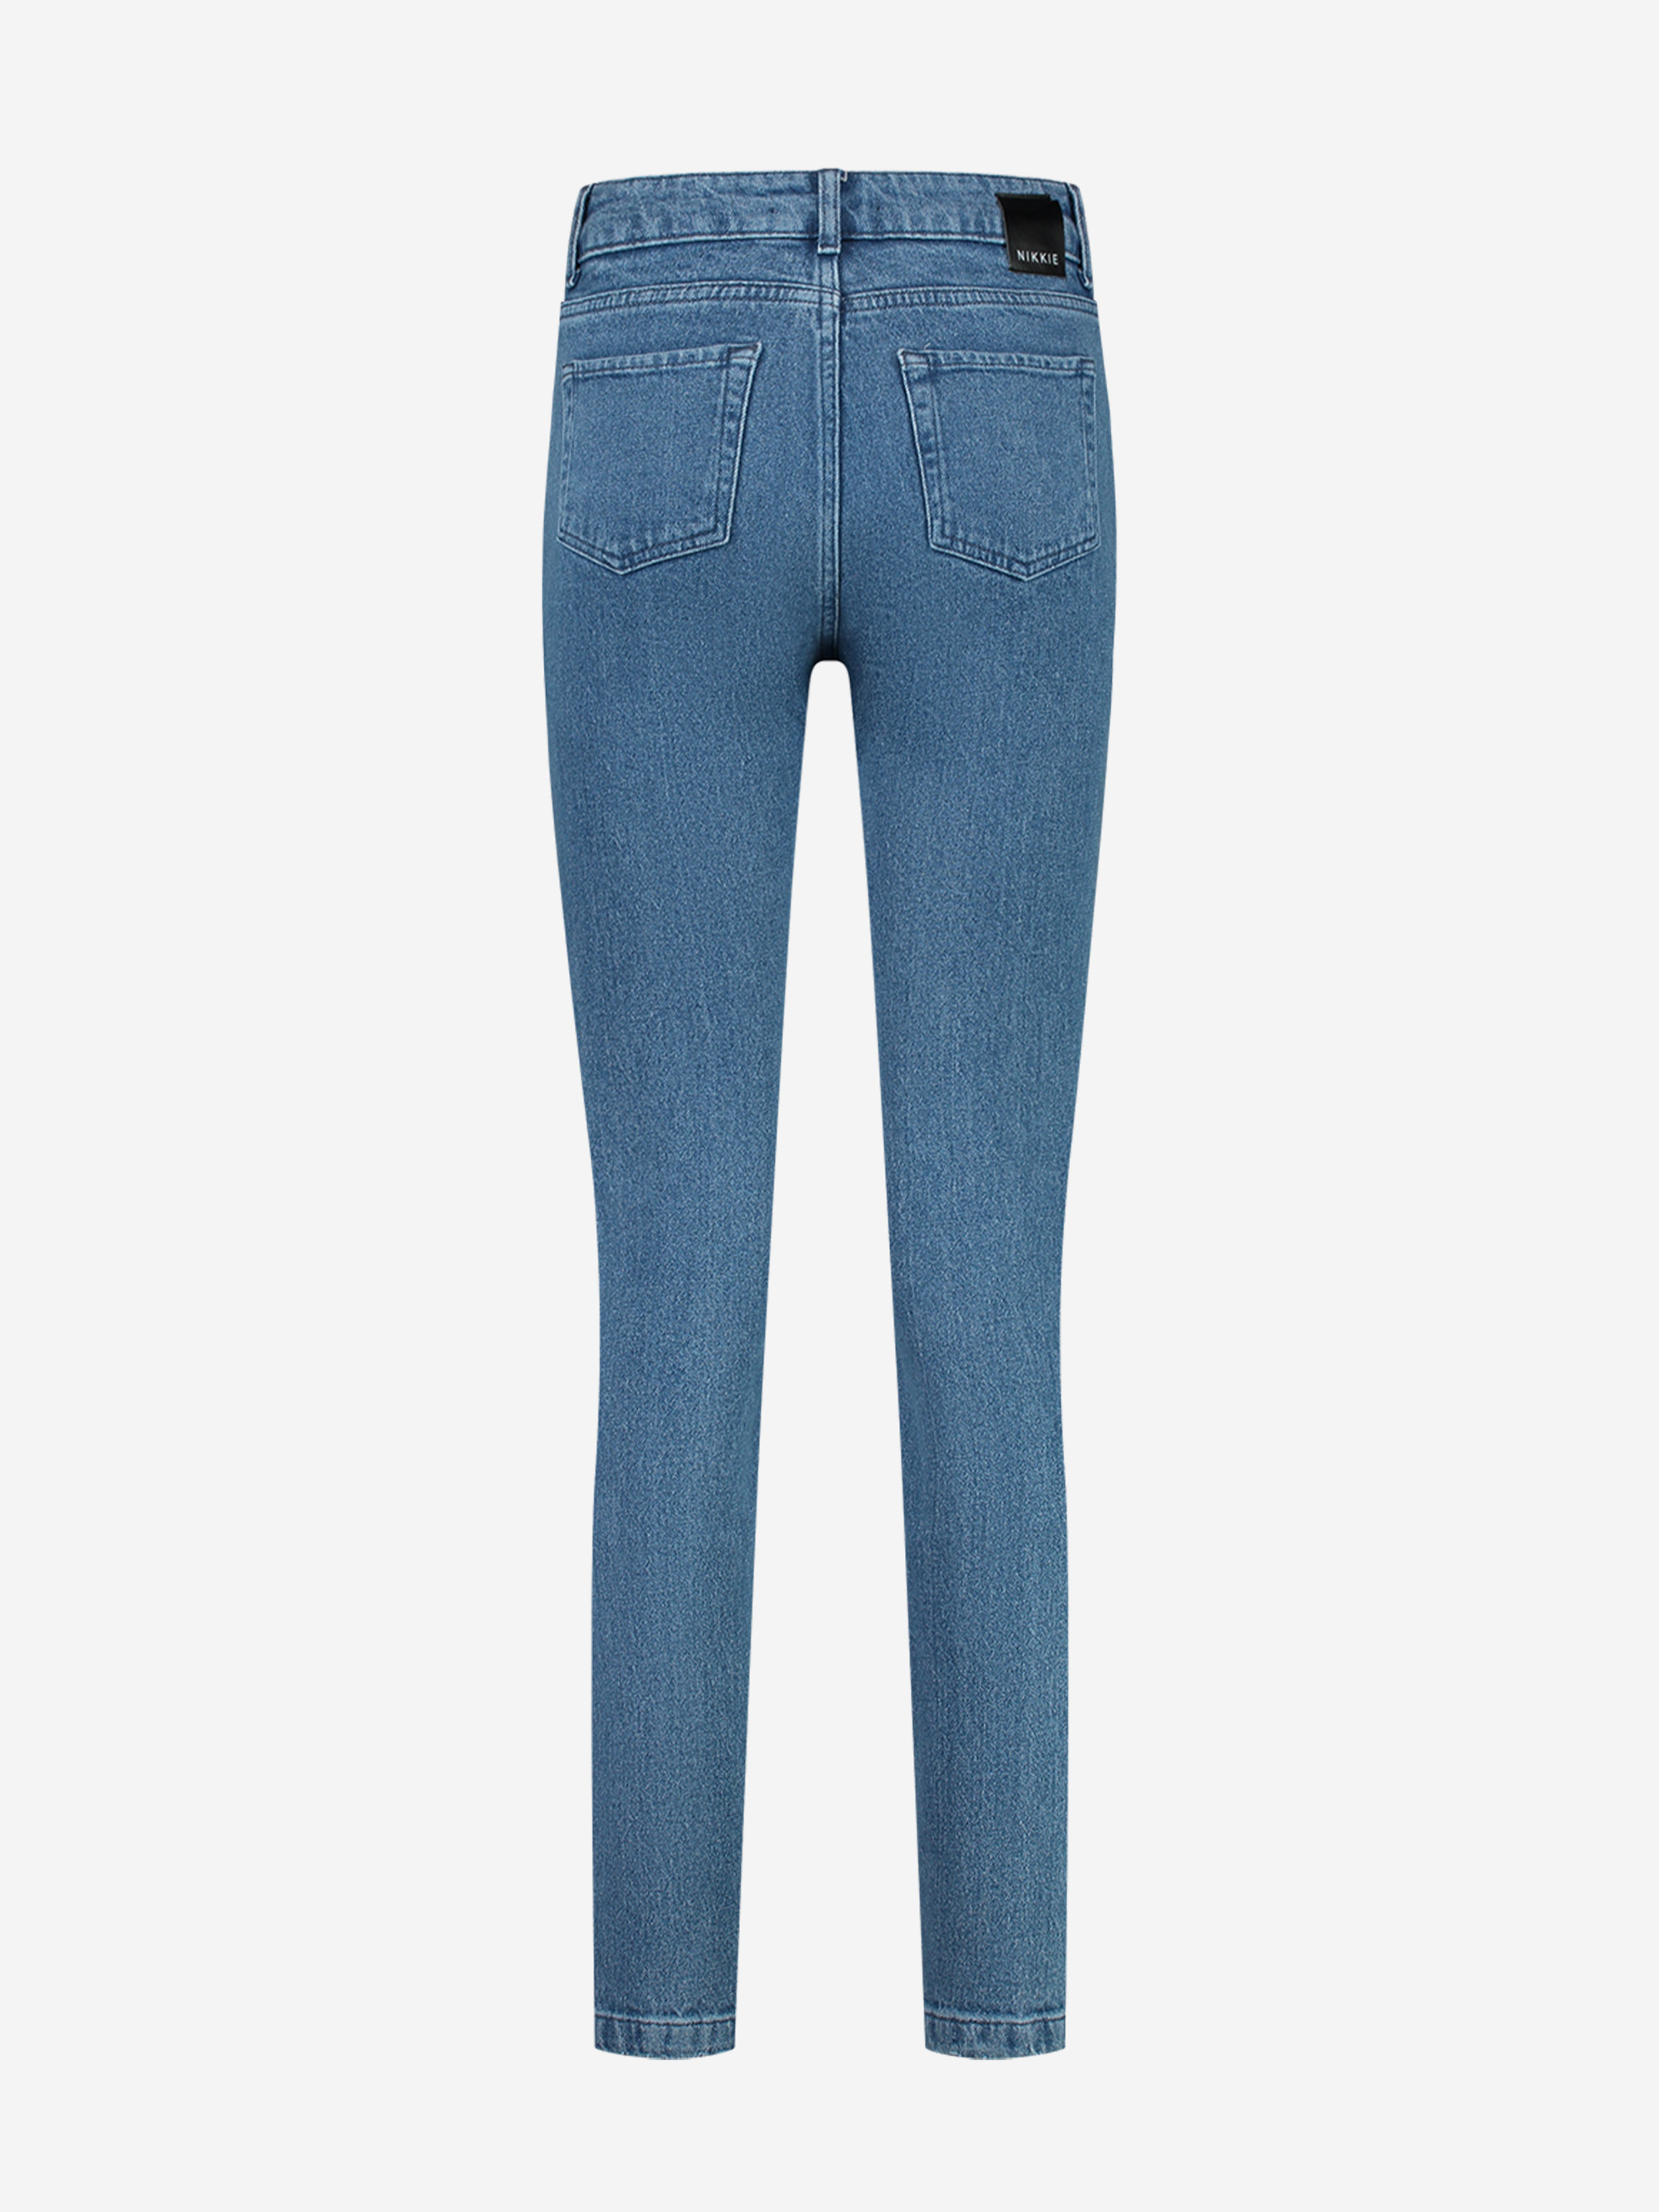 Skinny jeans met lijn detail